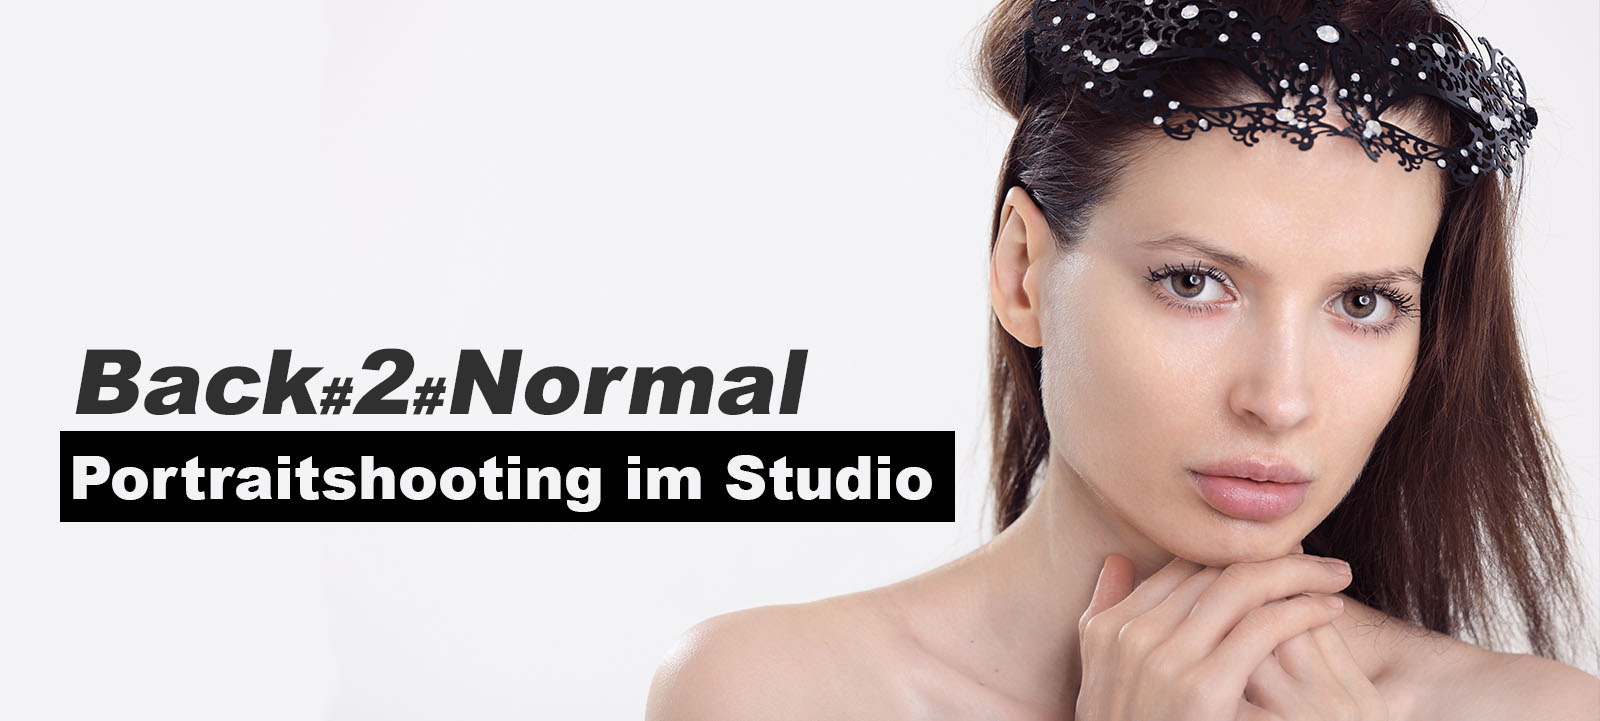 Back 2 Normal: Studioshooting